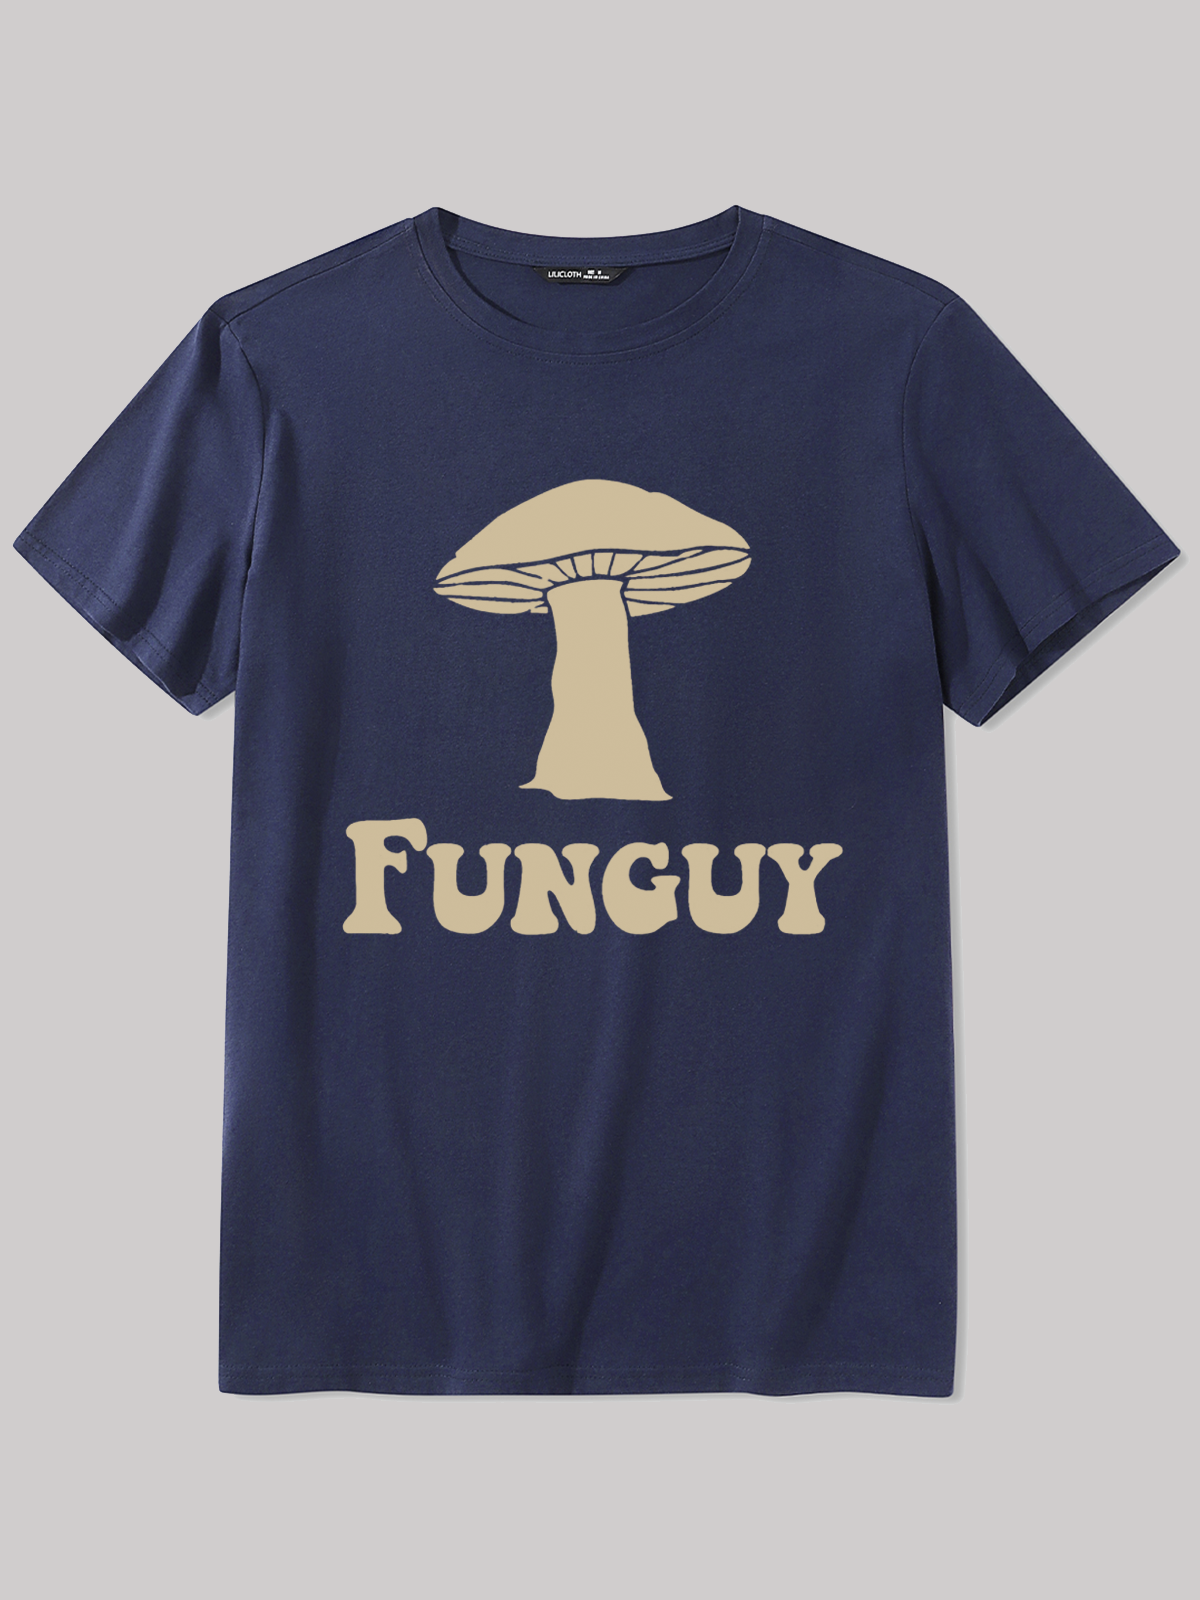 Men's Fungi Fun Guy Funny Cotton Loose Casual Crew Neck T-Shirt